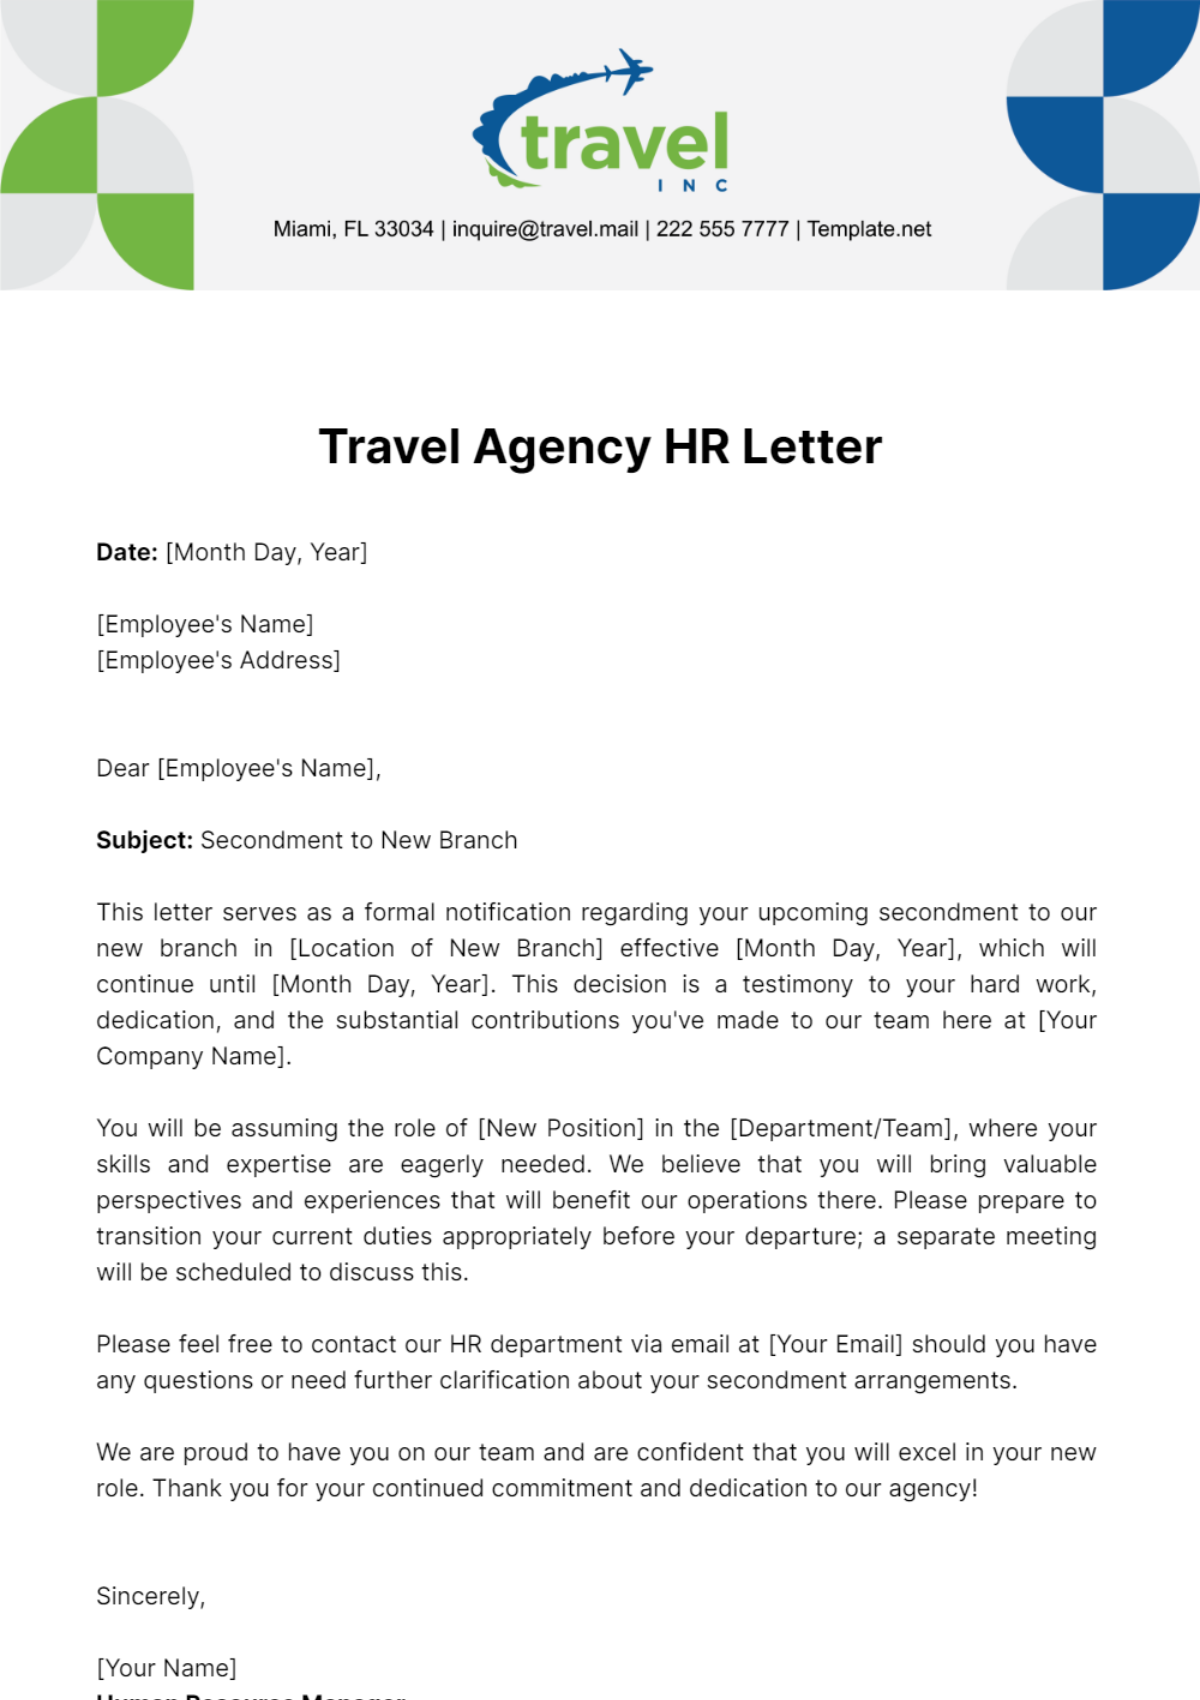 Travel Agency HR Letter Template